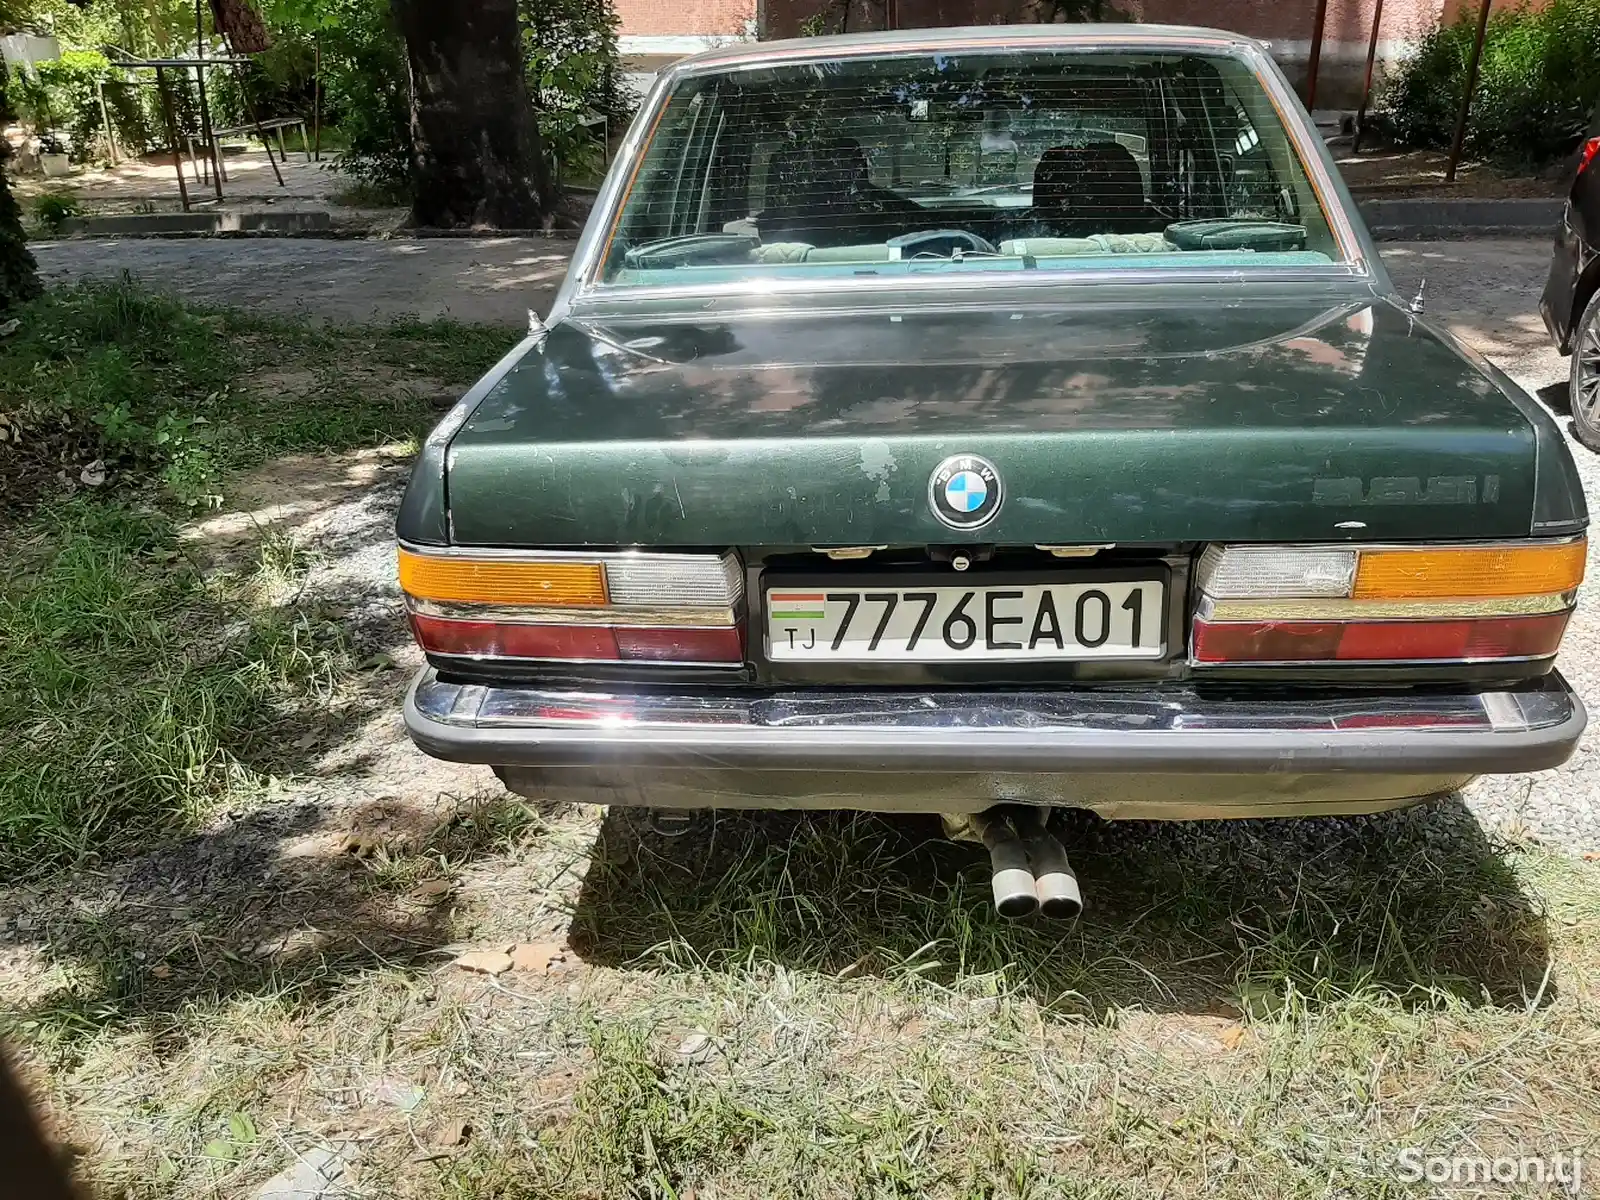 BMW 5 series, 1986-1